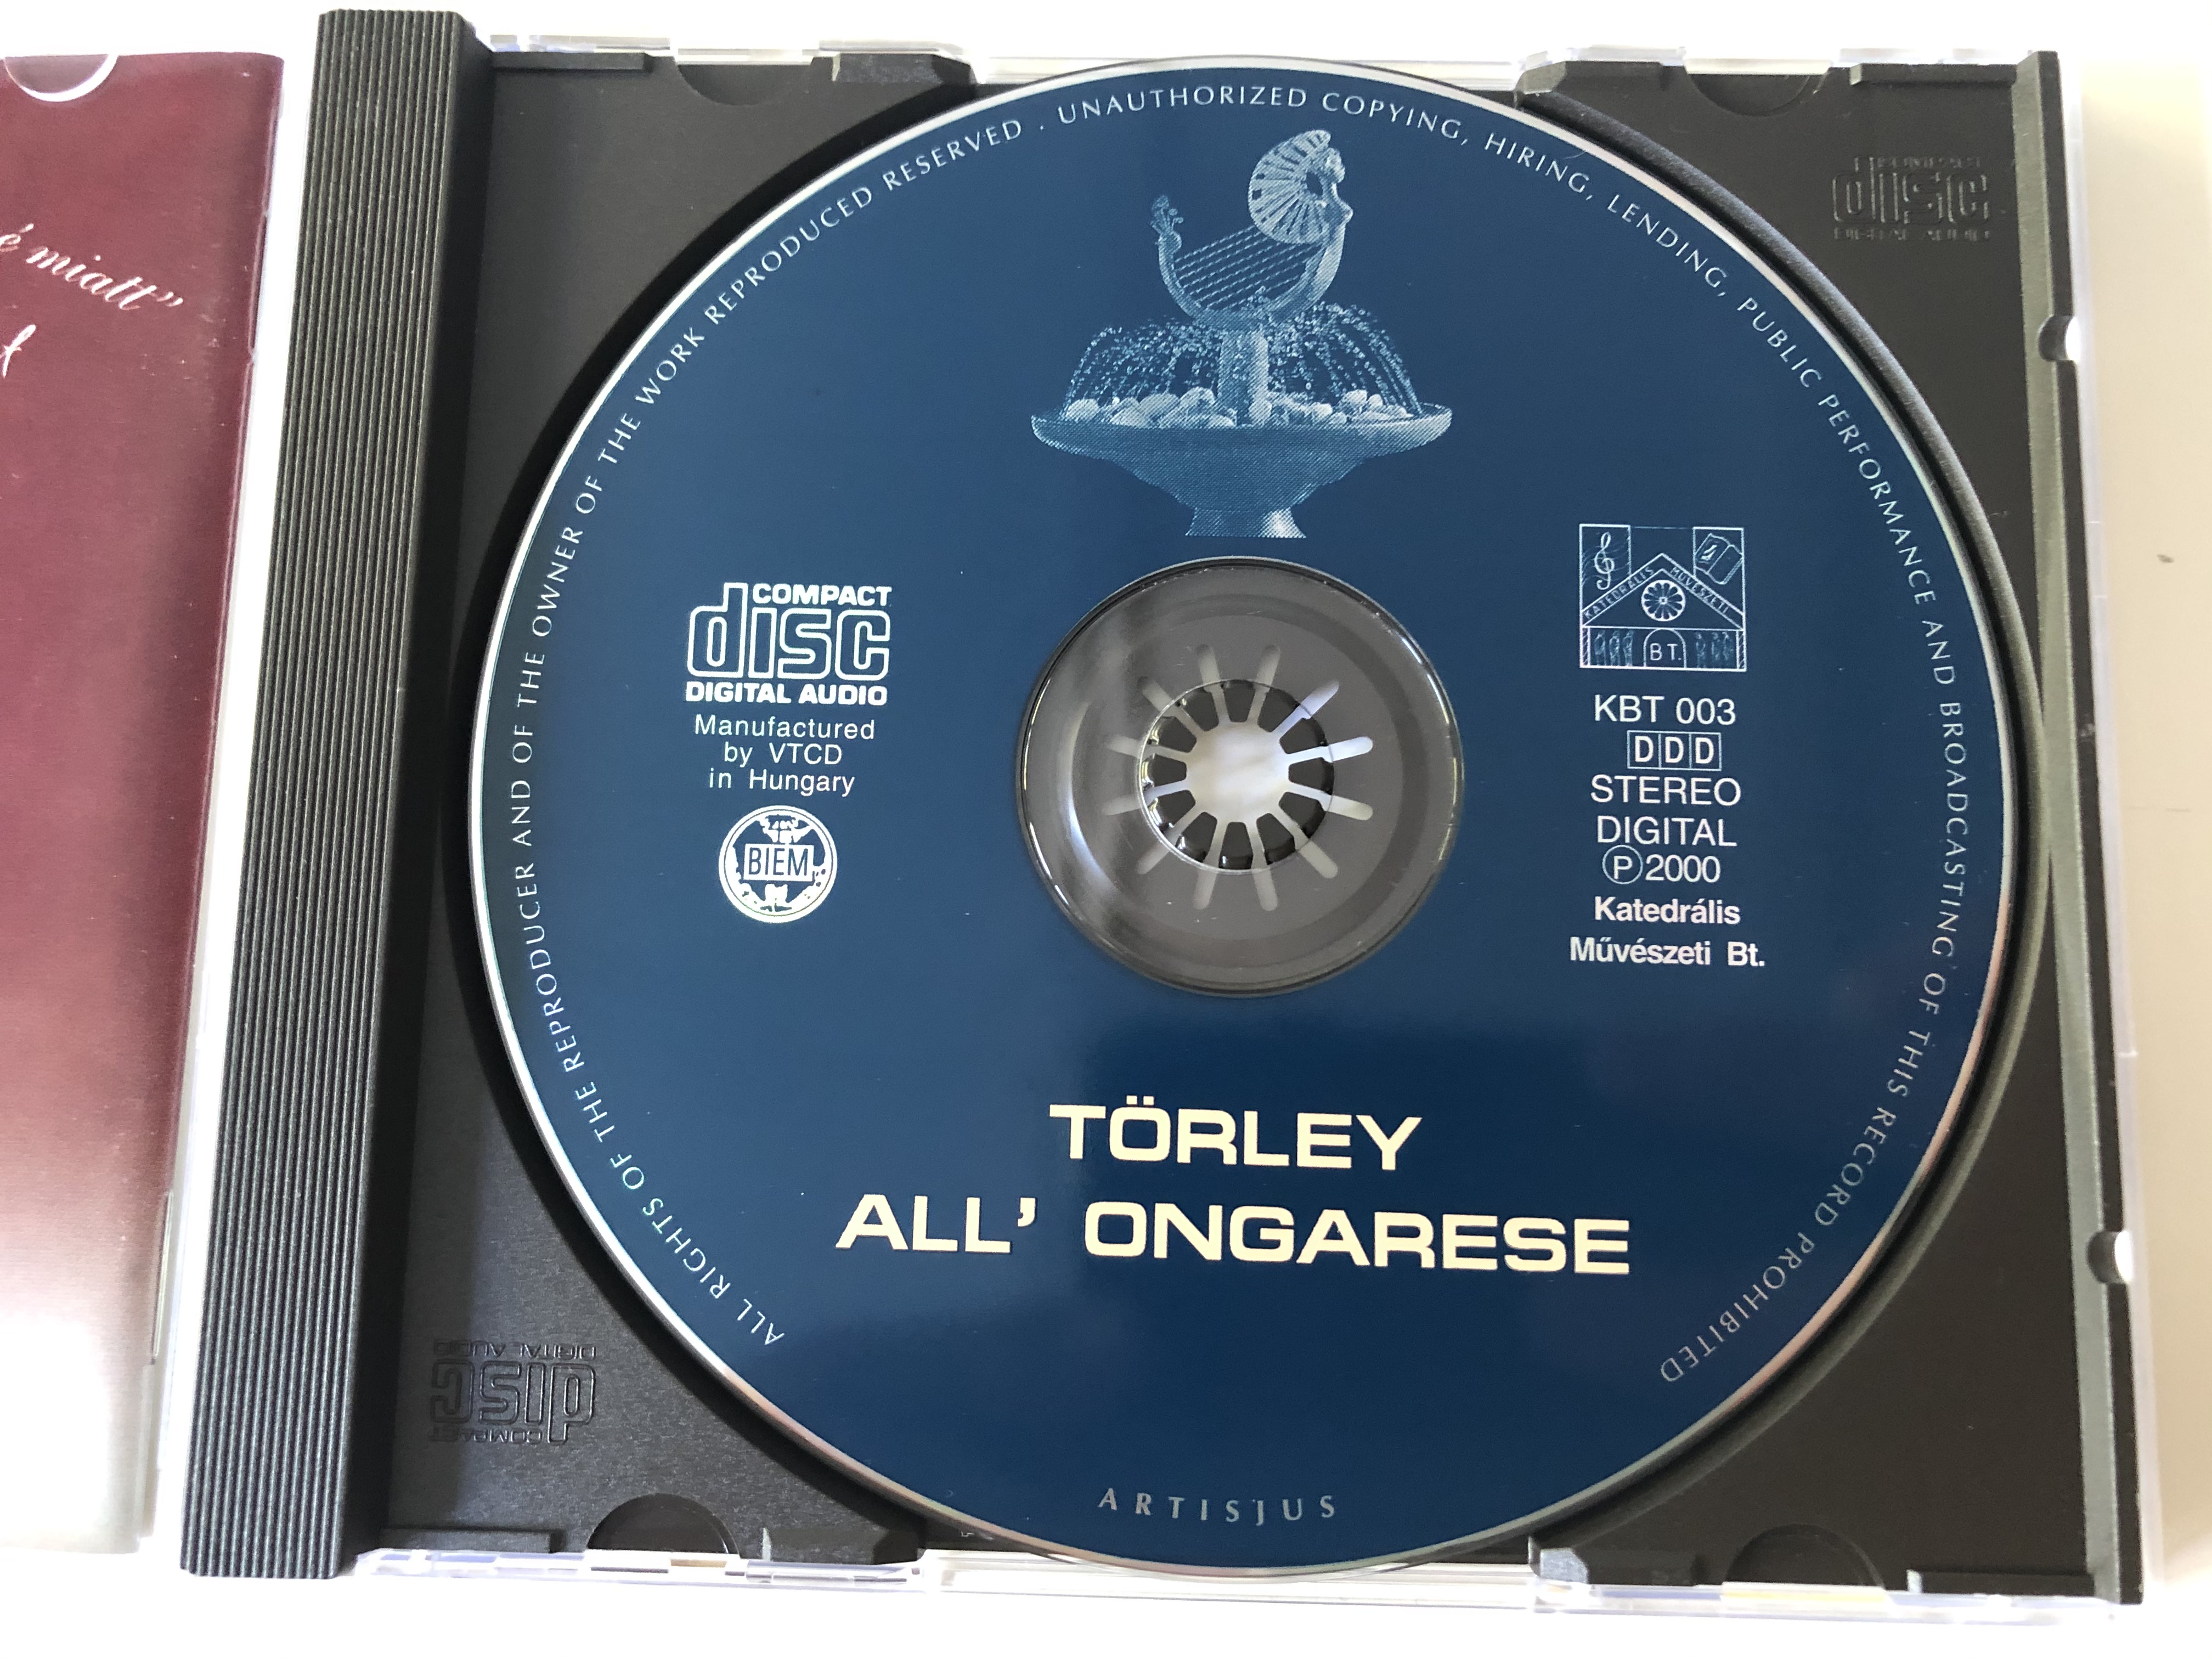 torley-all-ongarese-katedralis-muveszeti-bt.-audio-cd-2000-stereo-kbt-003-12-.jpg